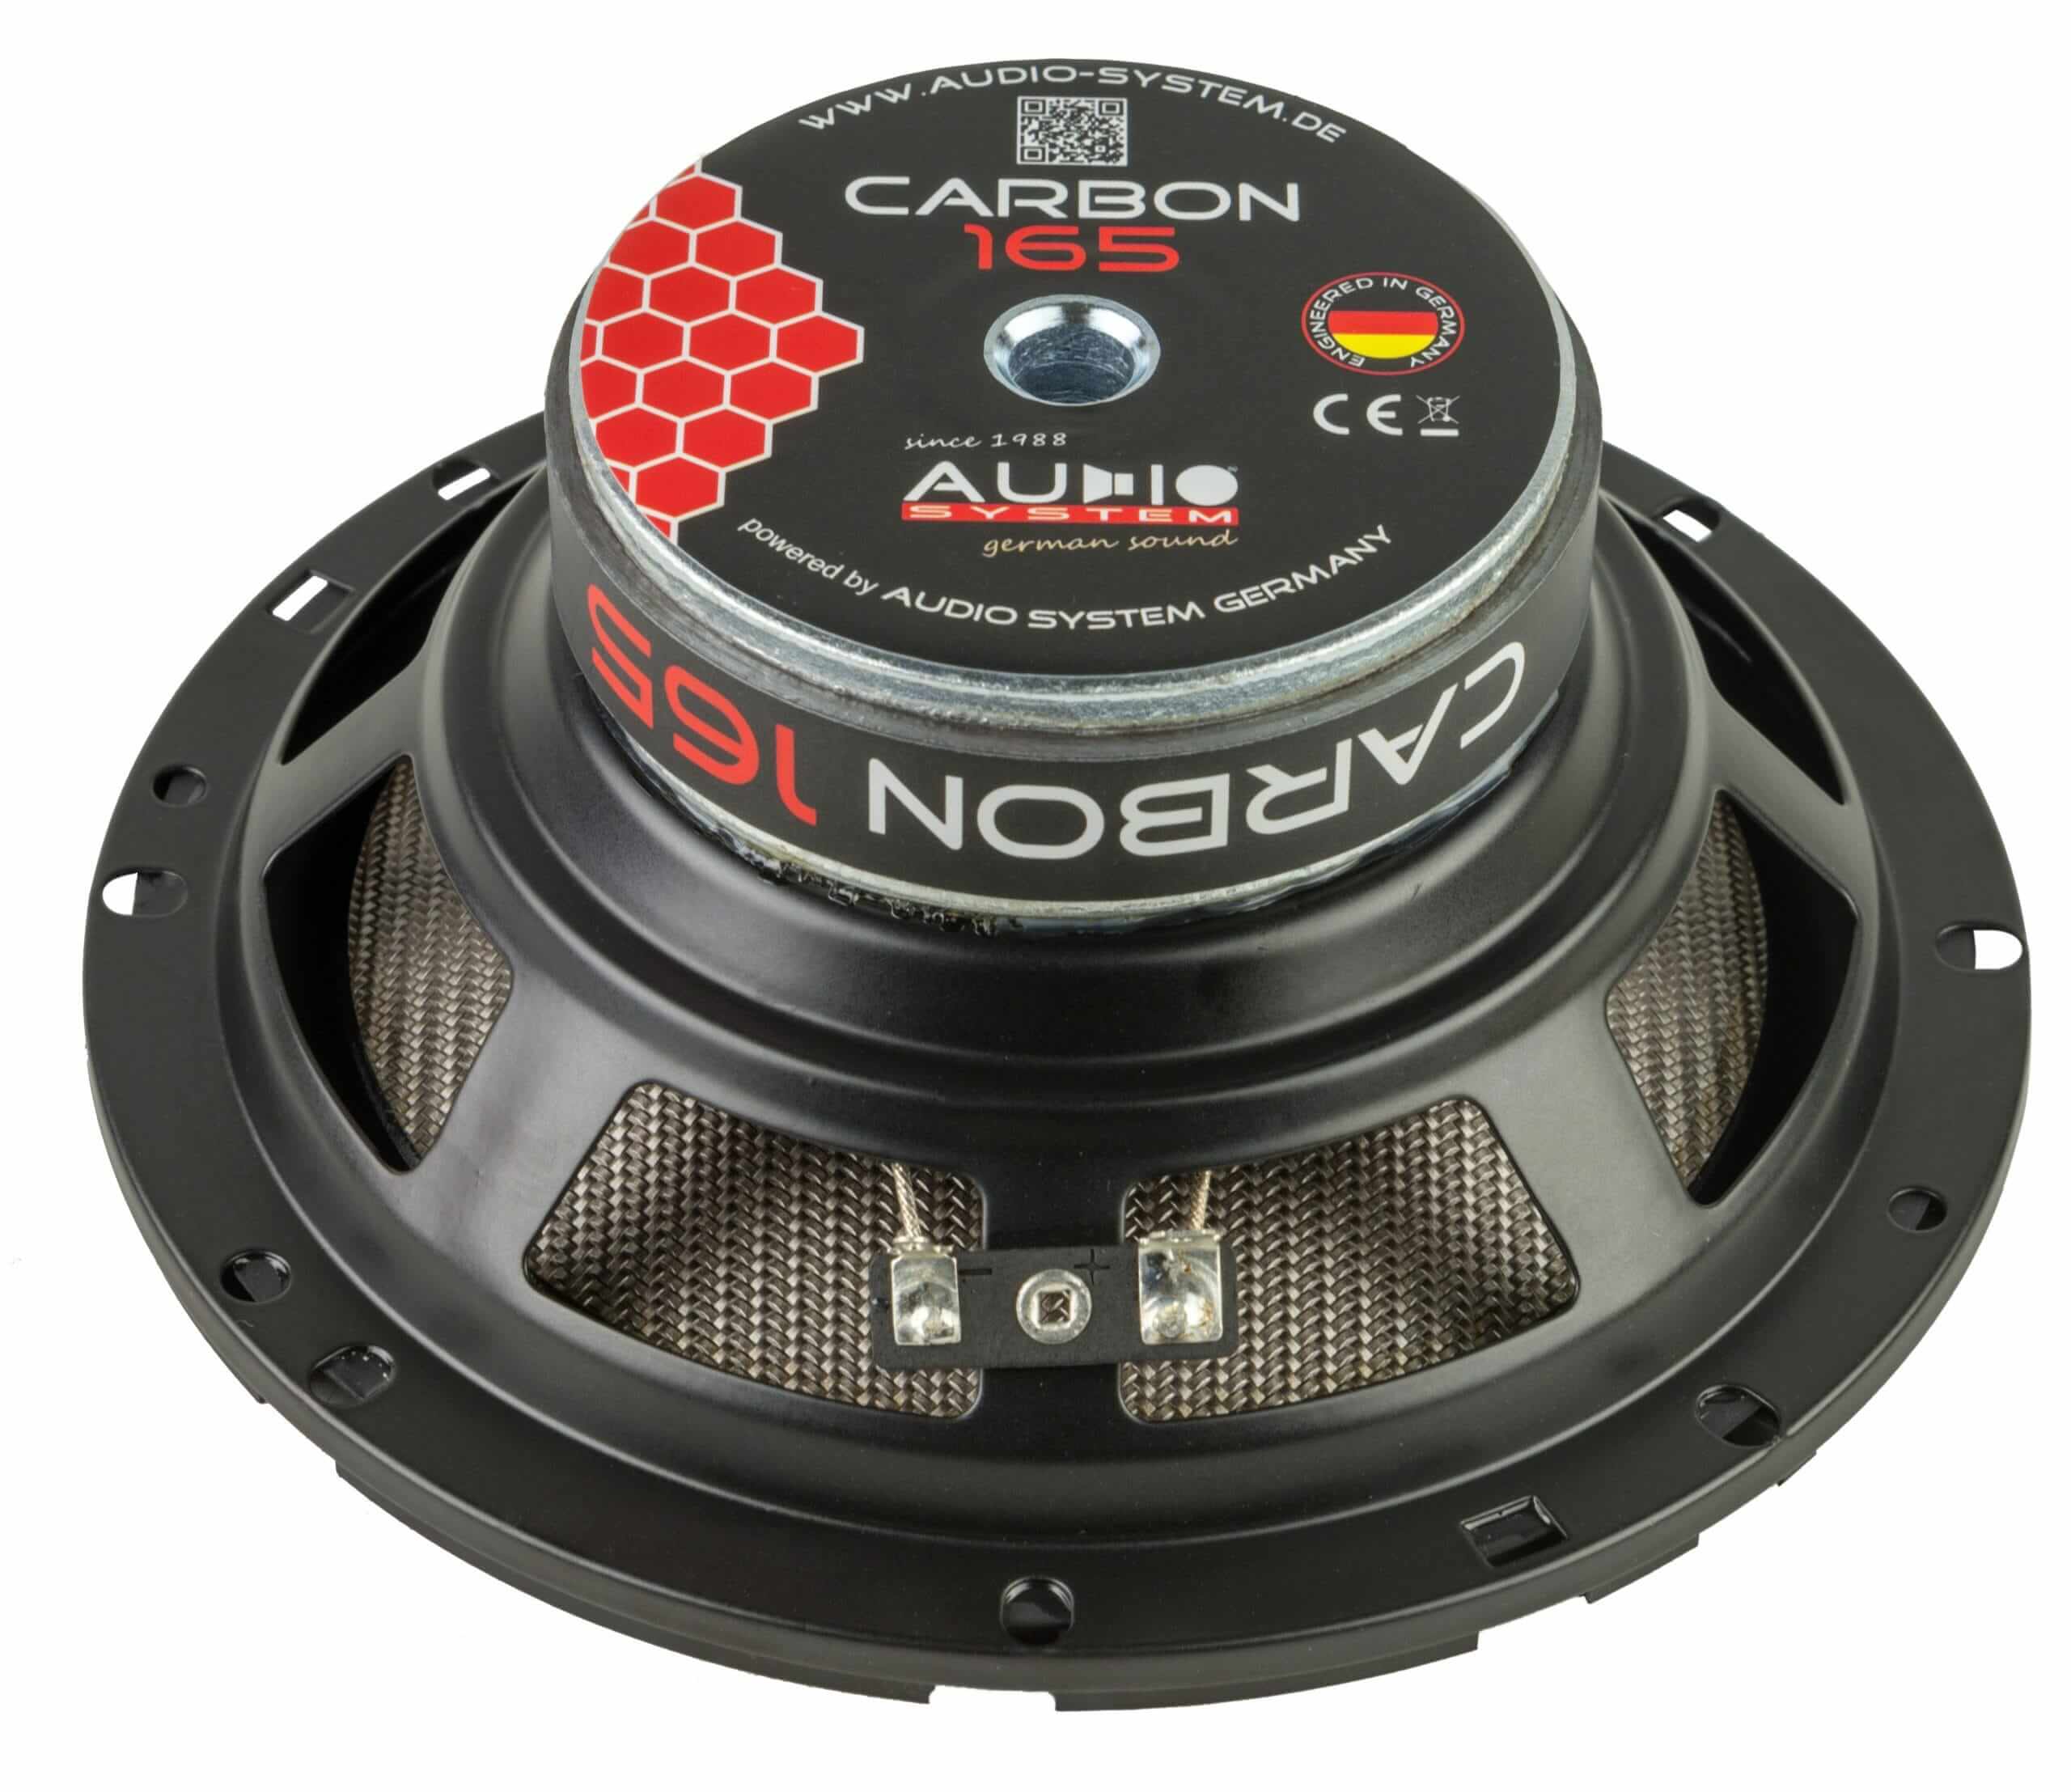 Audio System Carbon 165